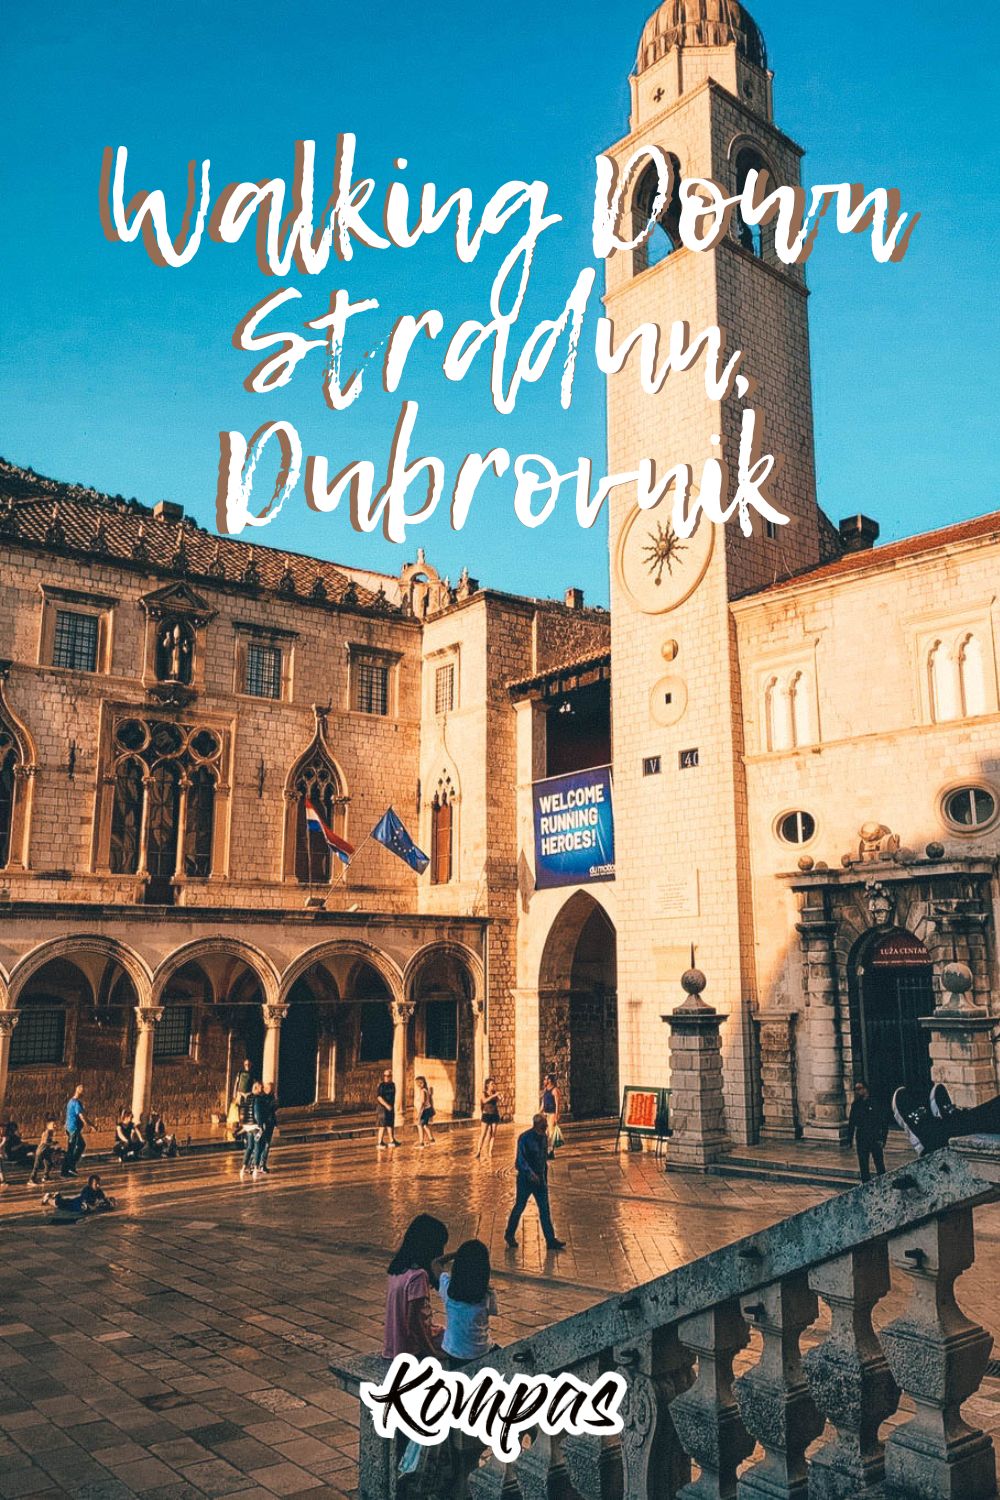 Walking Stradun Dubrovnik Read later